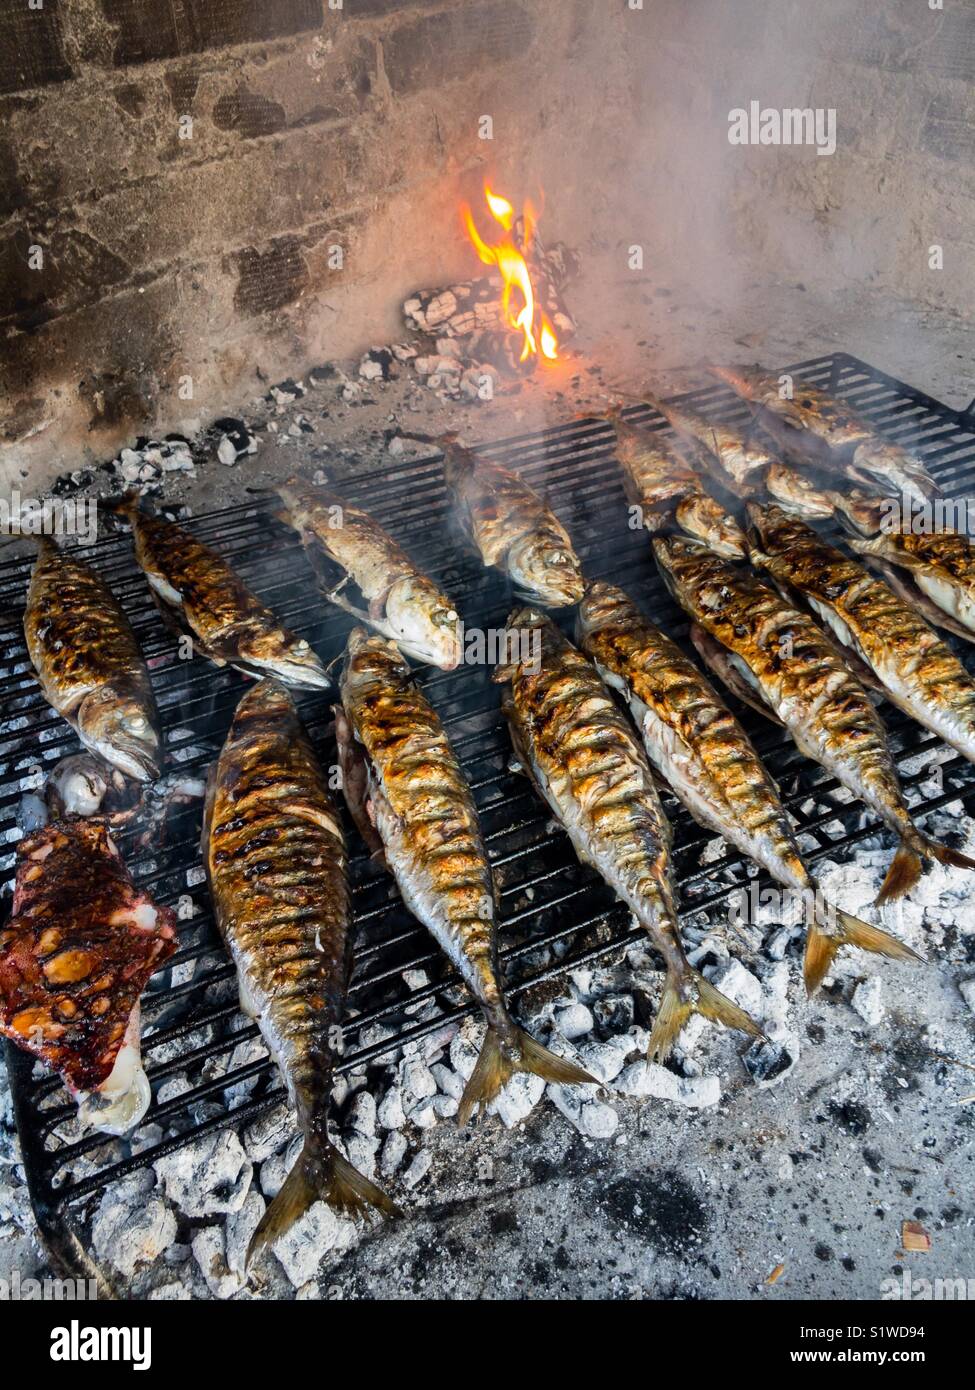 Mackerel fish on the grill Stock Photo